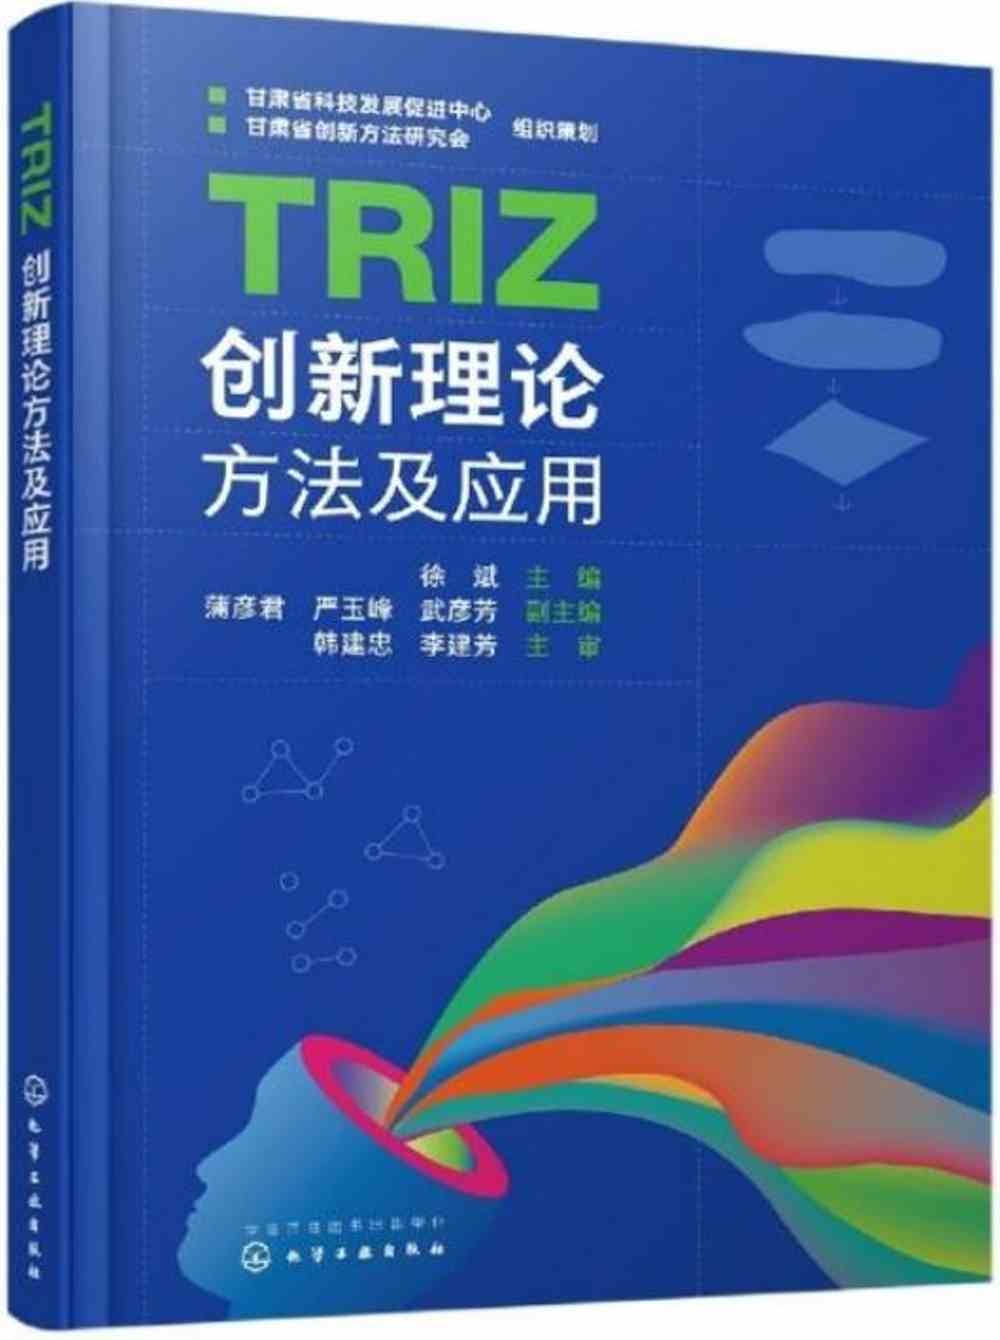 TRIZ創新理論方法及應用